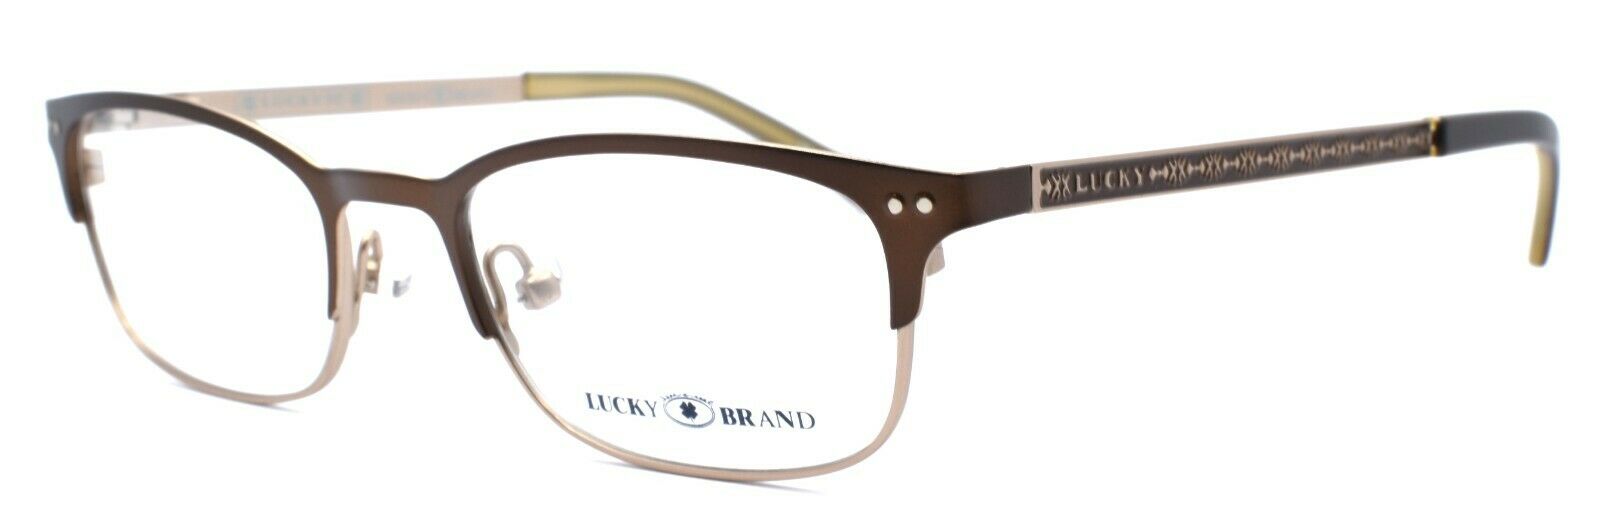 1-LUCKY BRAND Clever Kids Unisex Eyeglasses Frames 45-17-130 Brown-751286250954-IKSpecs